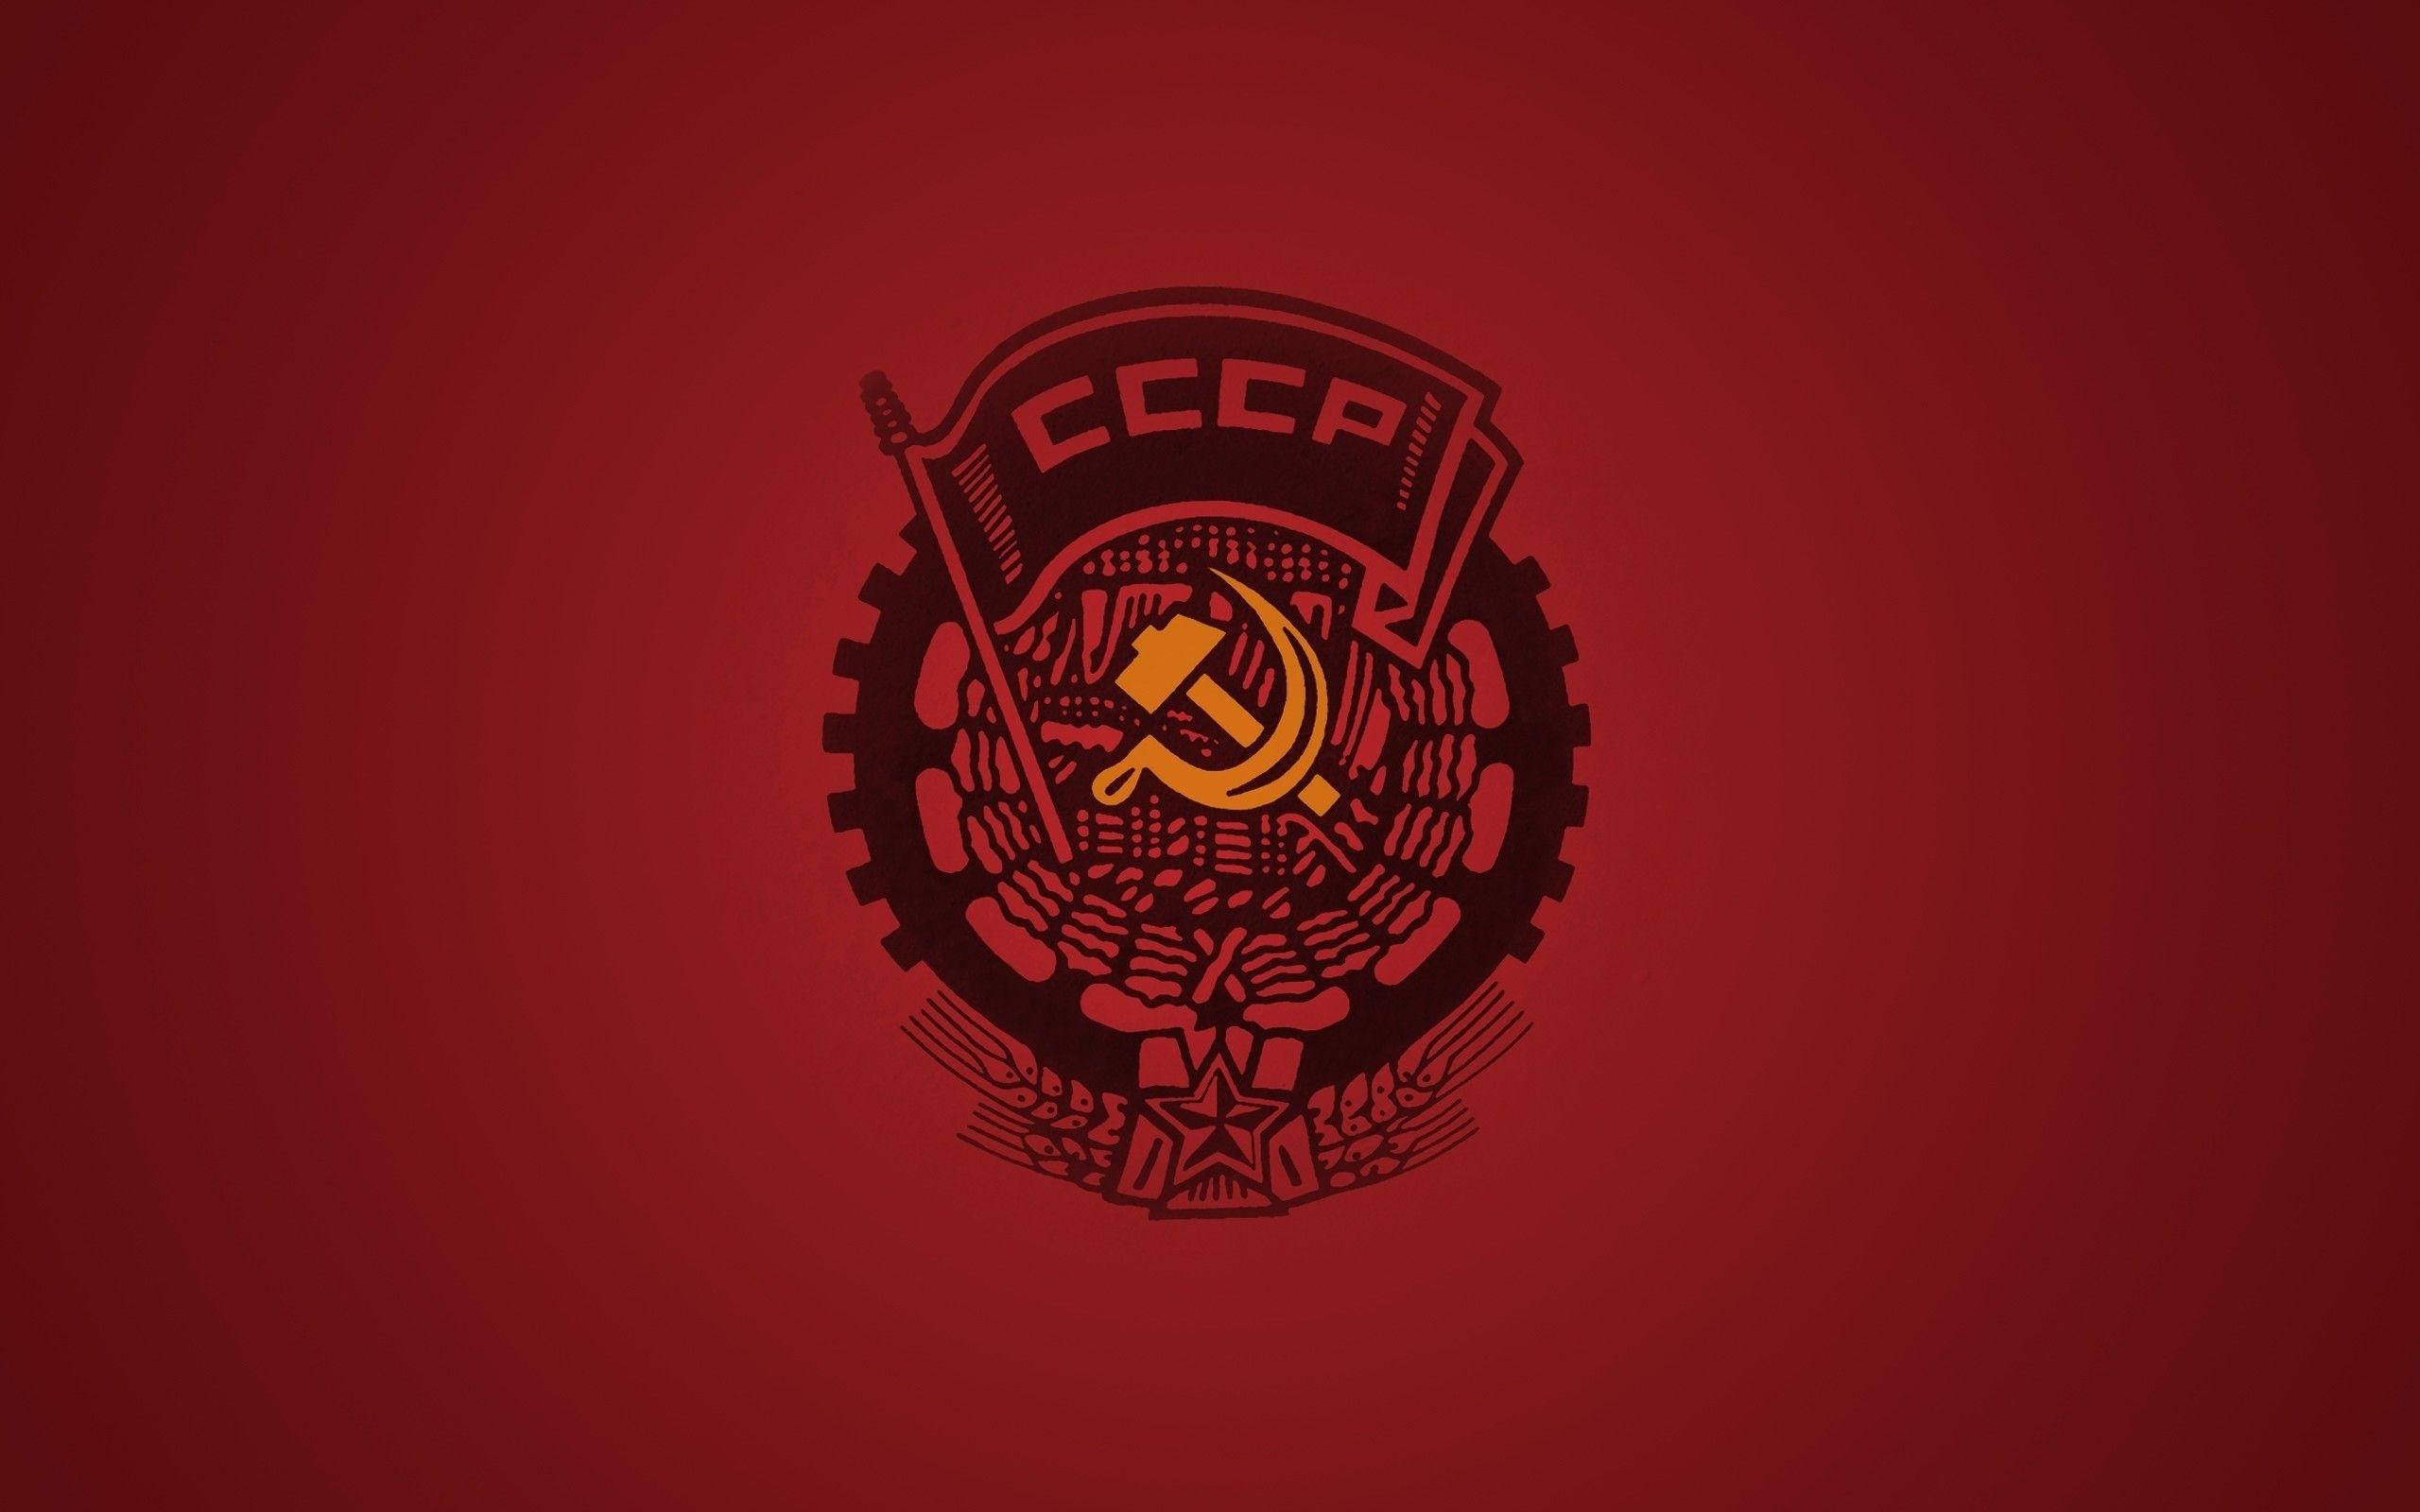 Soviet Wallpaper by ApophisZeoN on DeviantArt